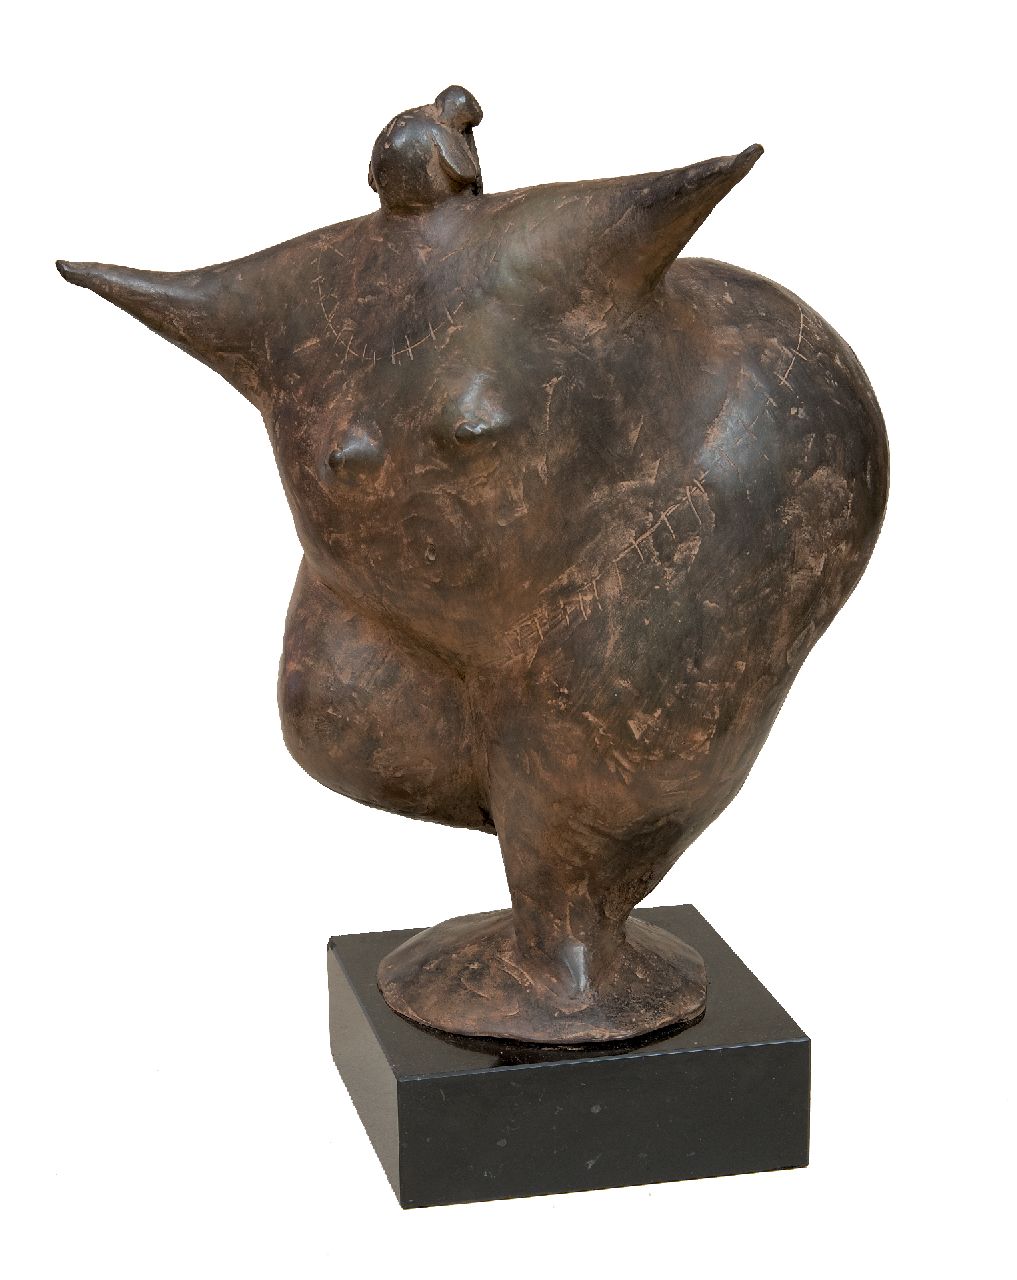 Hemert E. van | Evert van Hemert, Gerda, patinated bronze 27.0 x 23.0 cm, signed with monogram on the base and executed in 2012